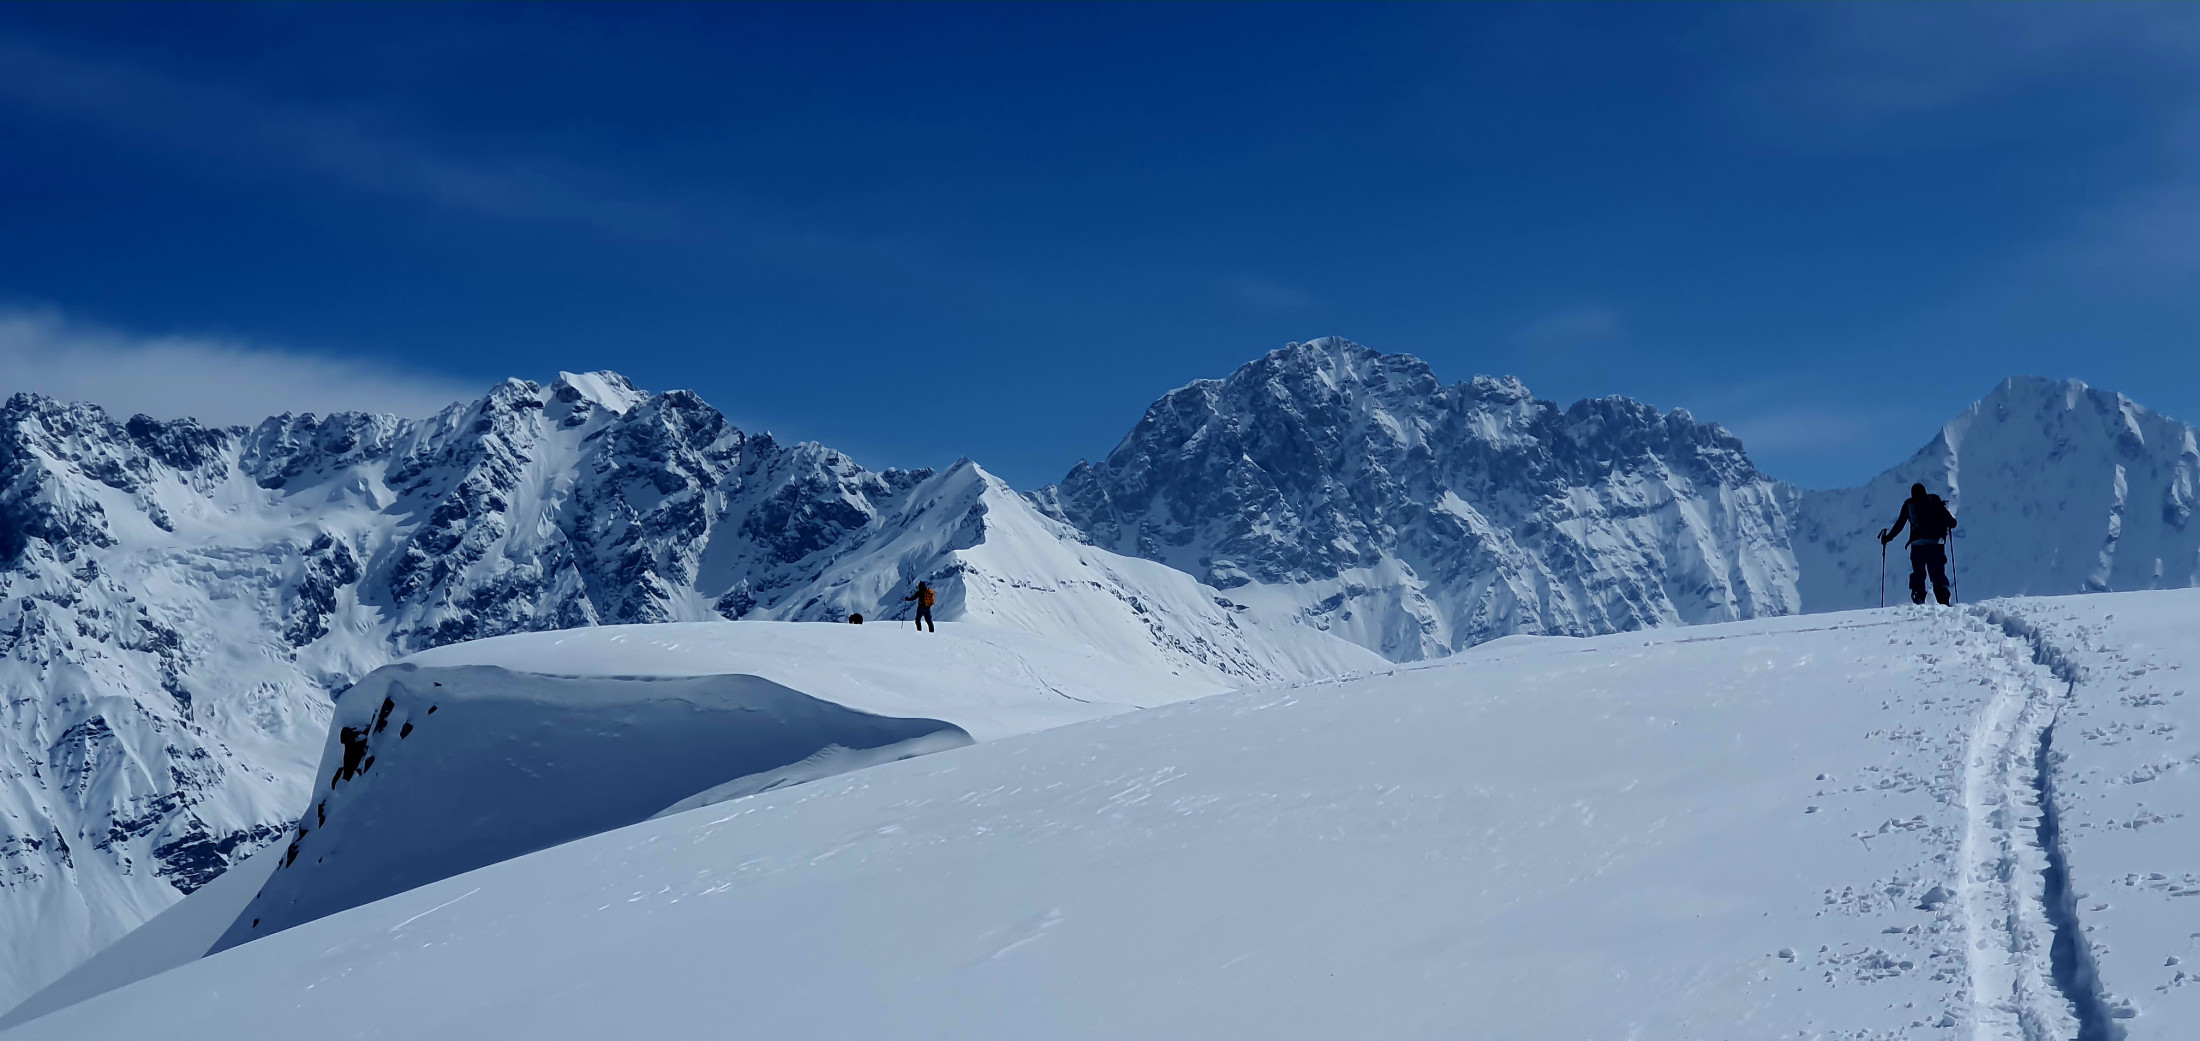 Ski-touring in Svaneti